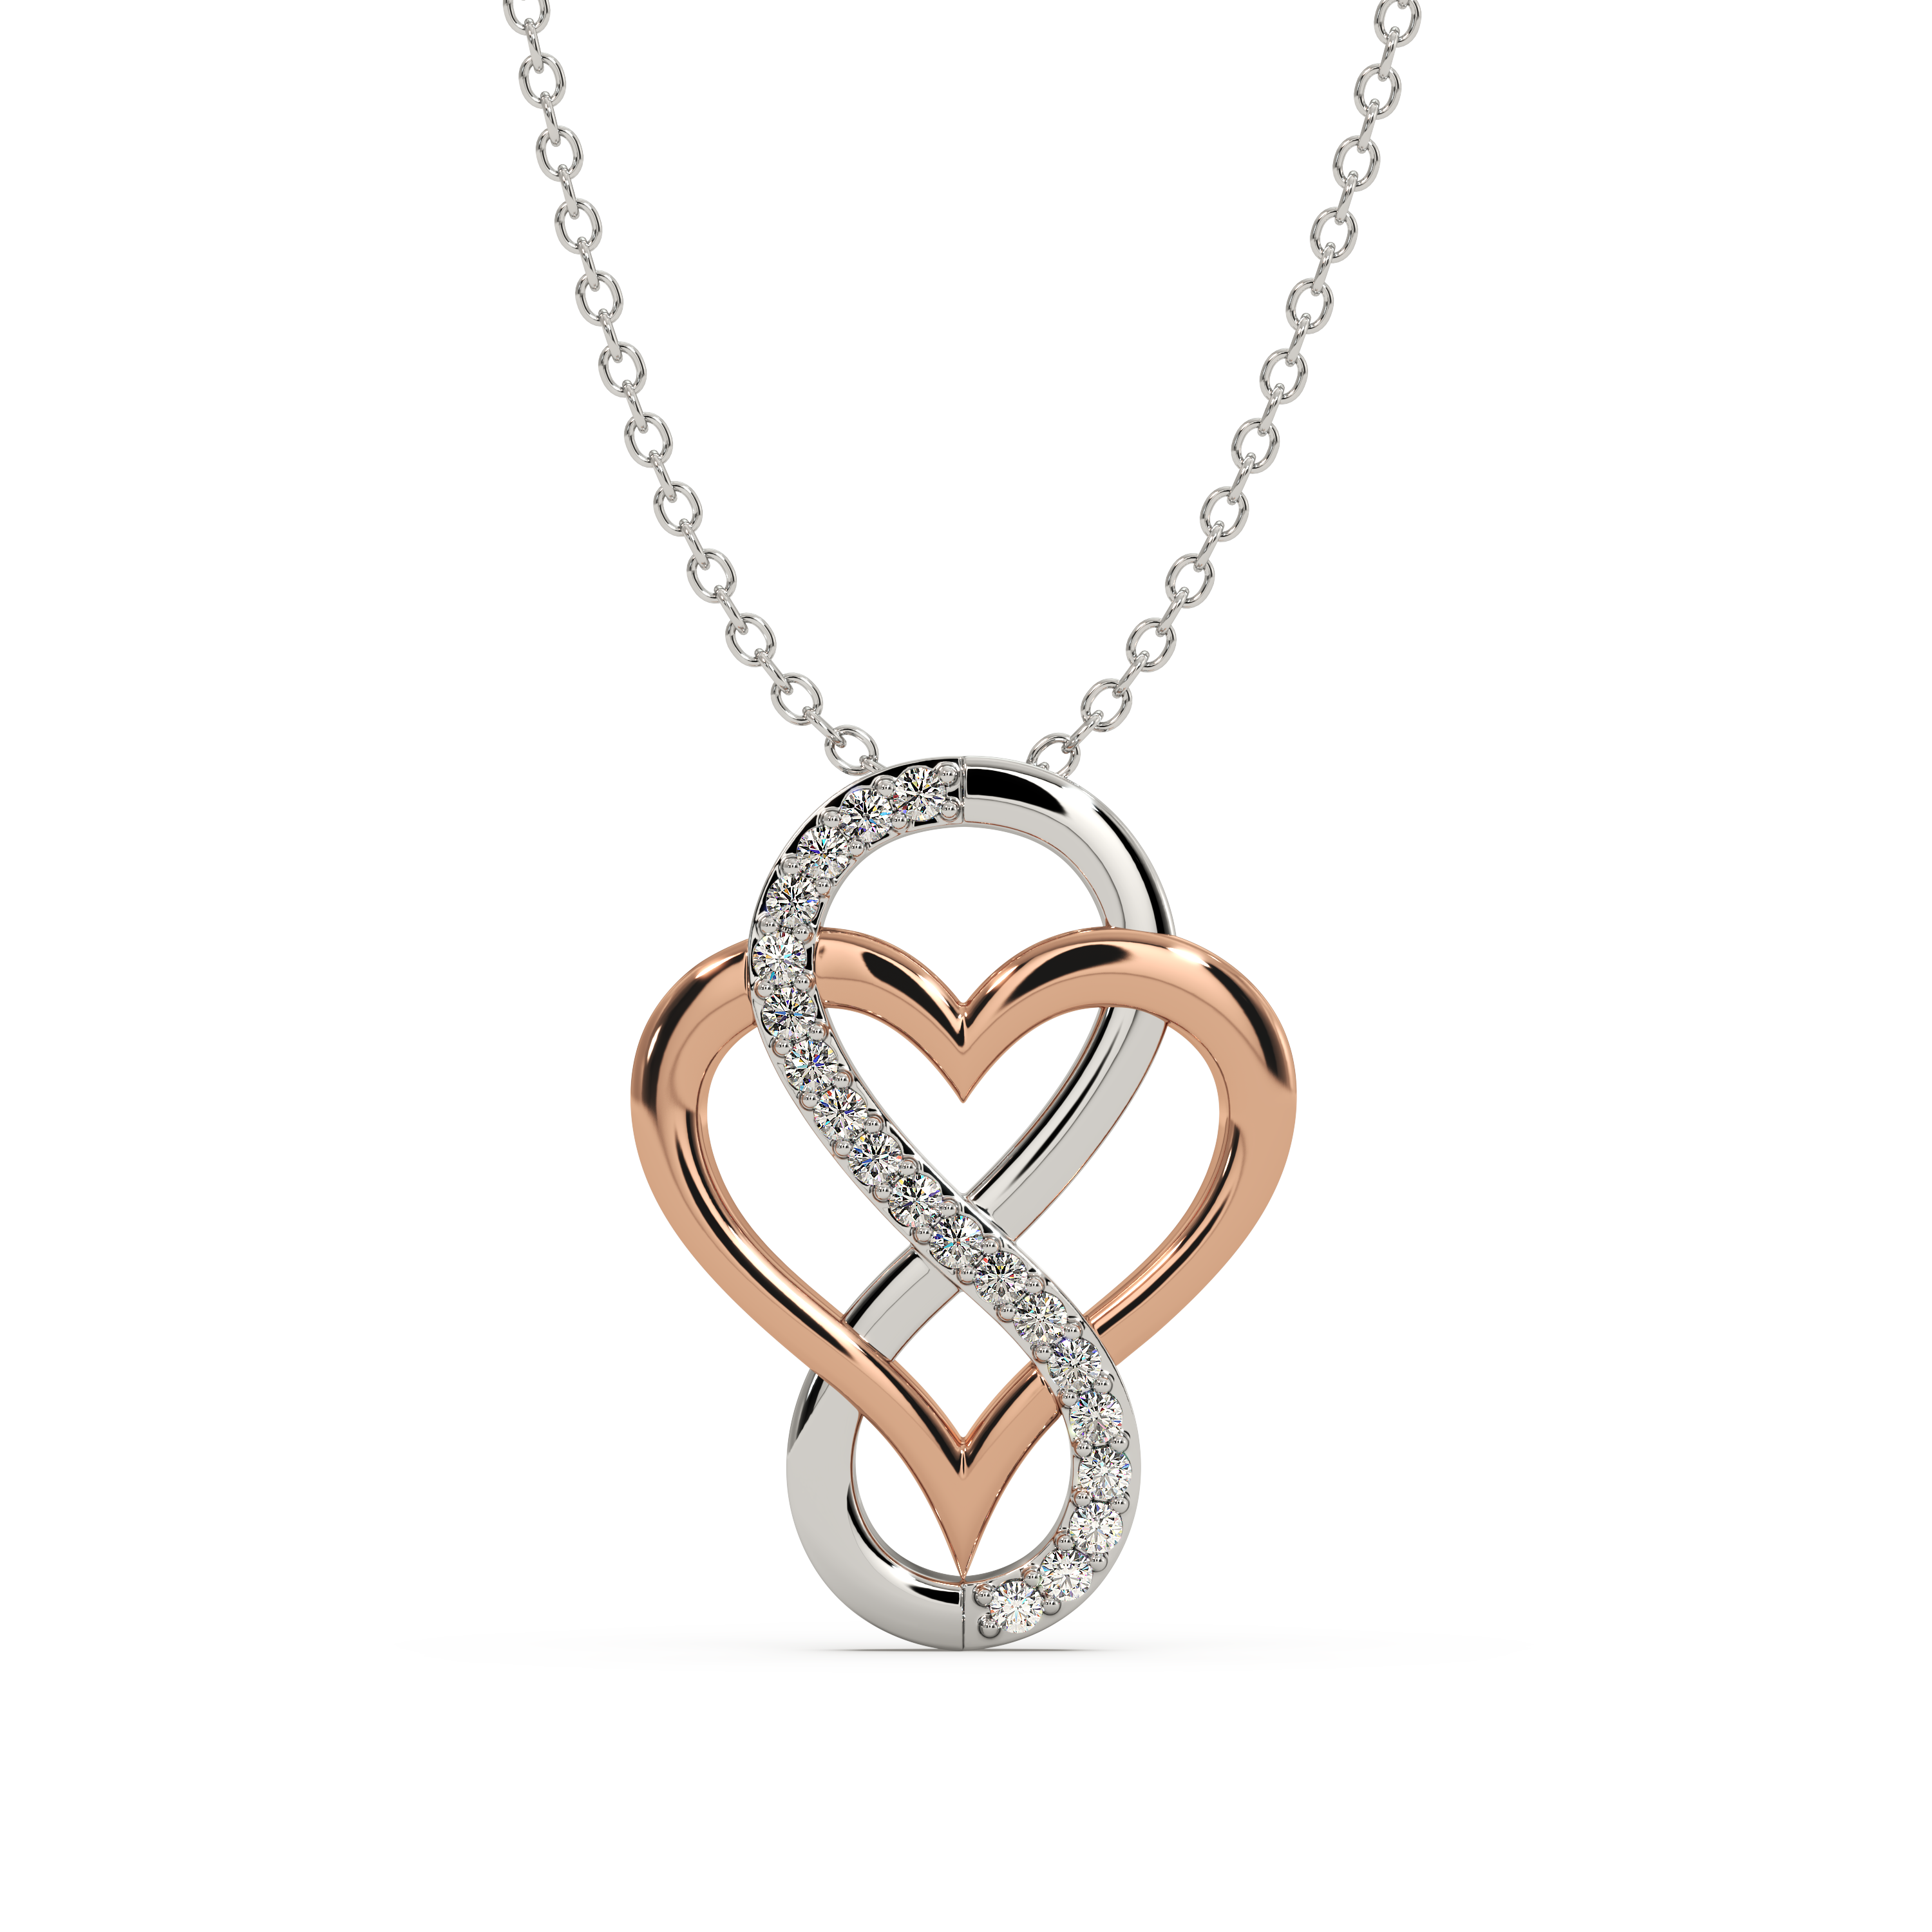 BOHOMOON Infinity Heart Necklace | Waterproof & Tarnish Free Stainless